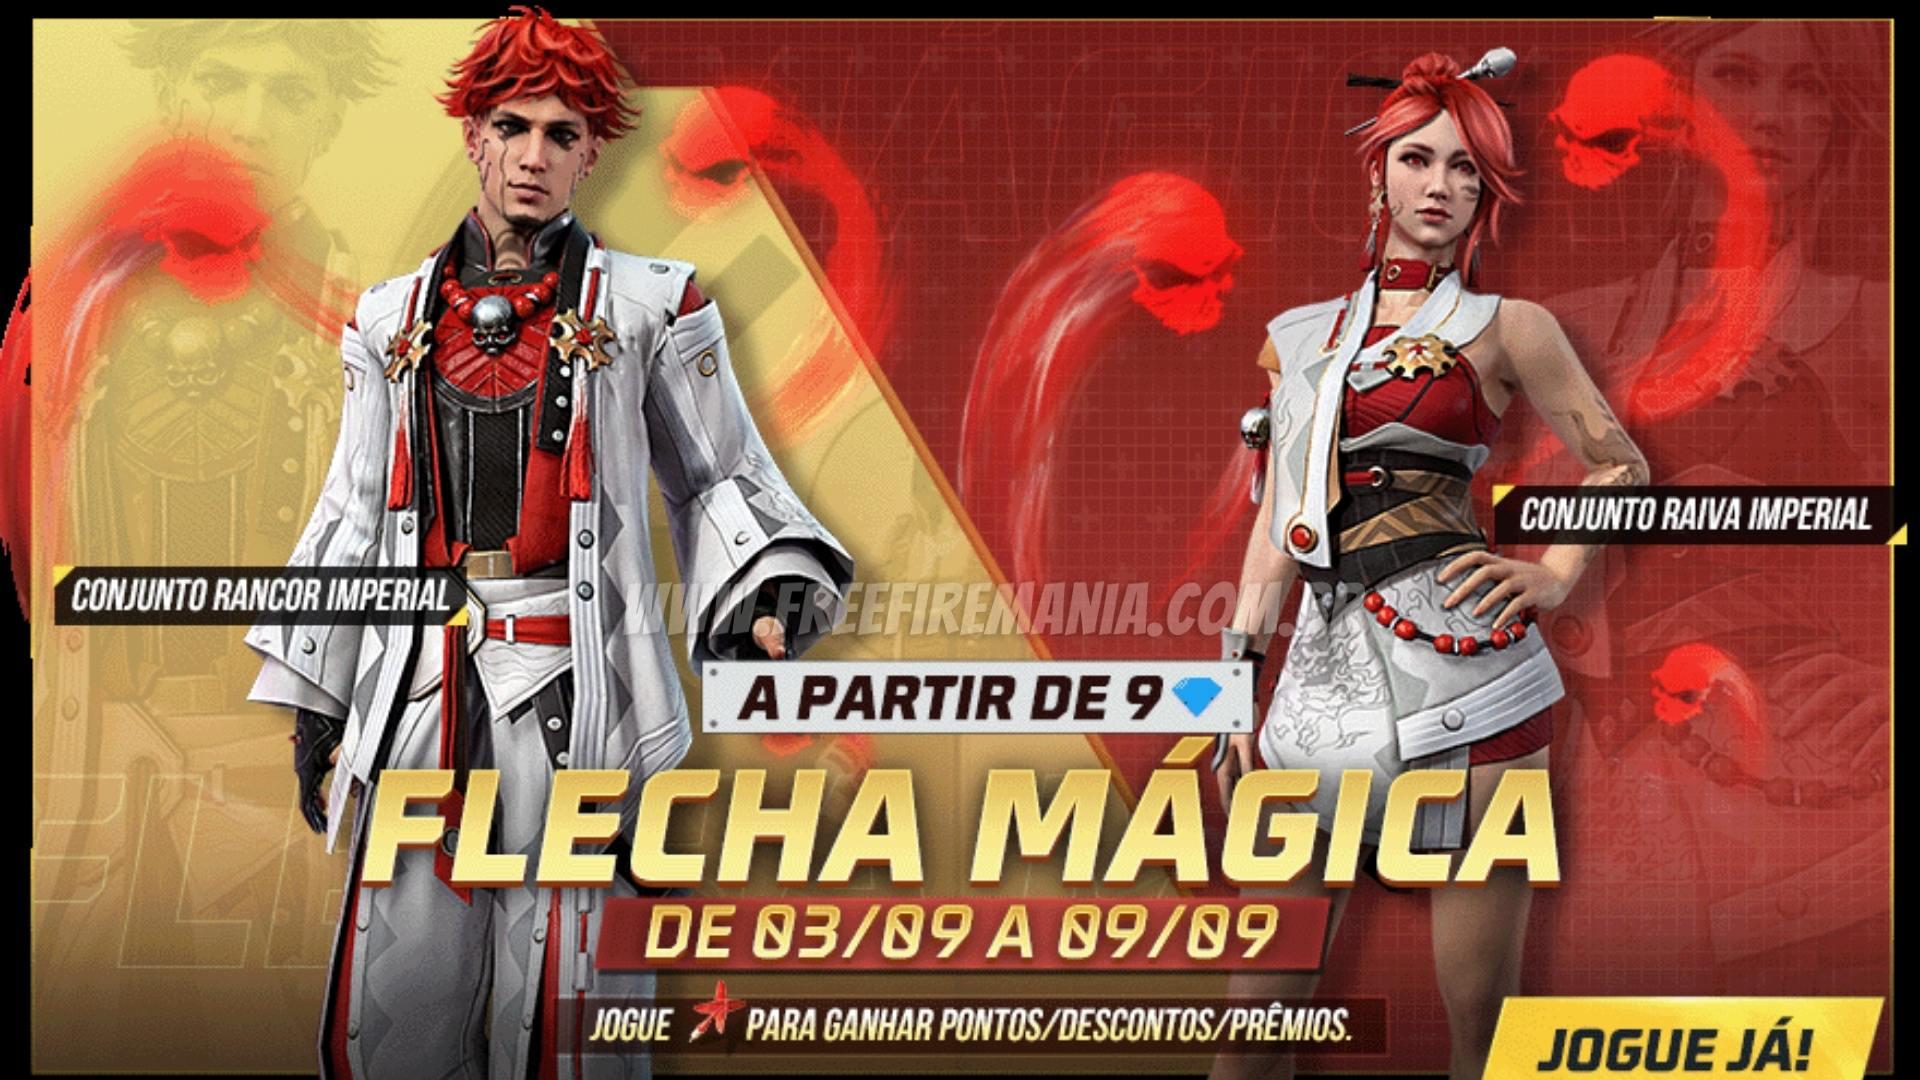 Flecha Magica Free Fire Wallpapers